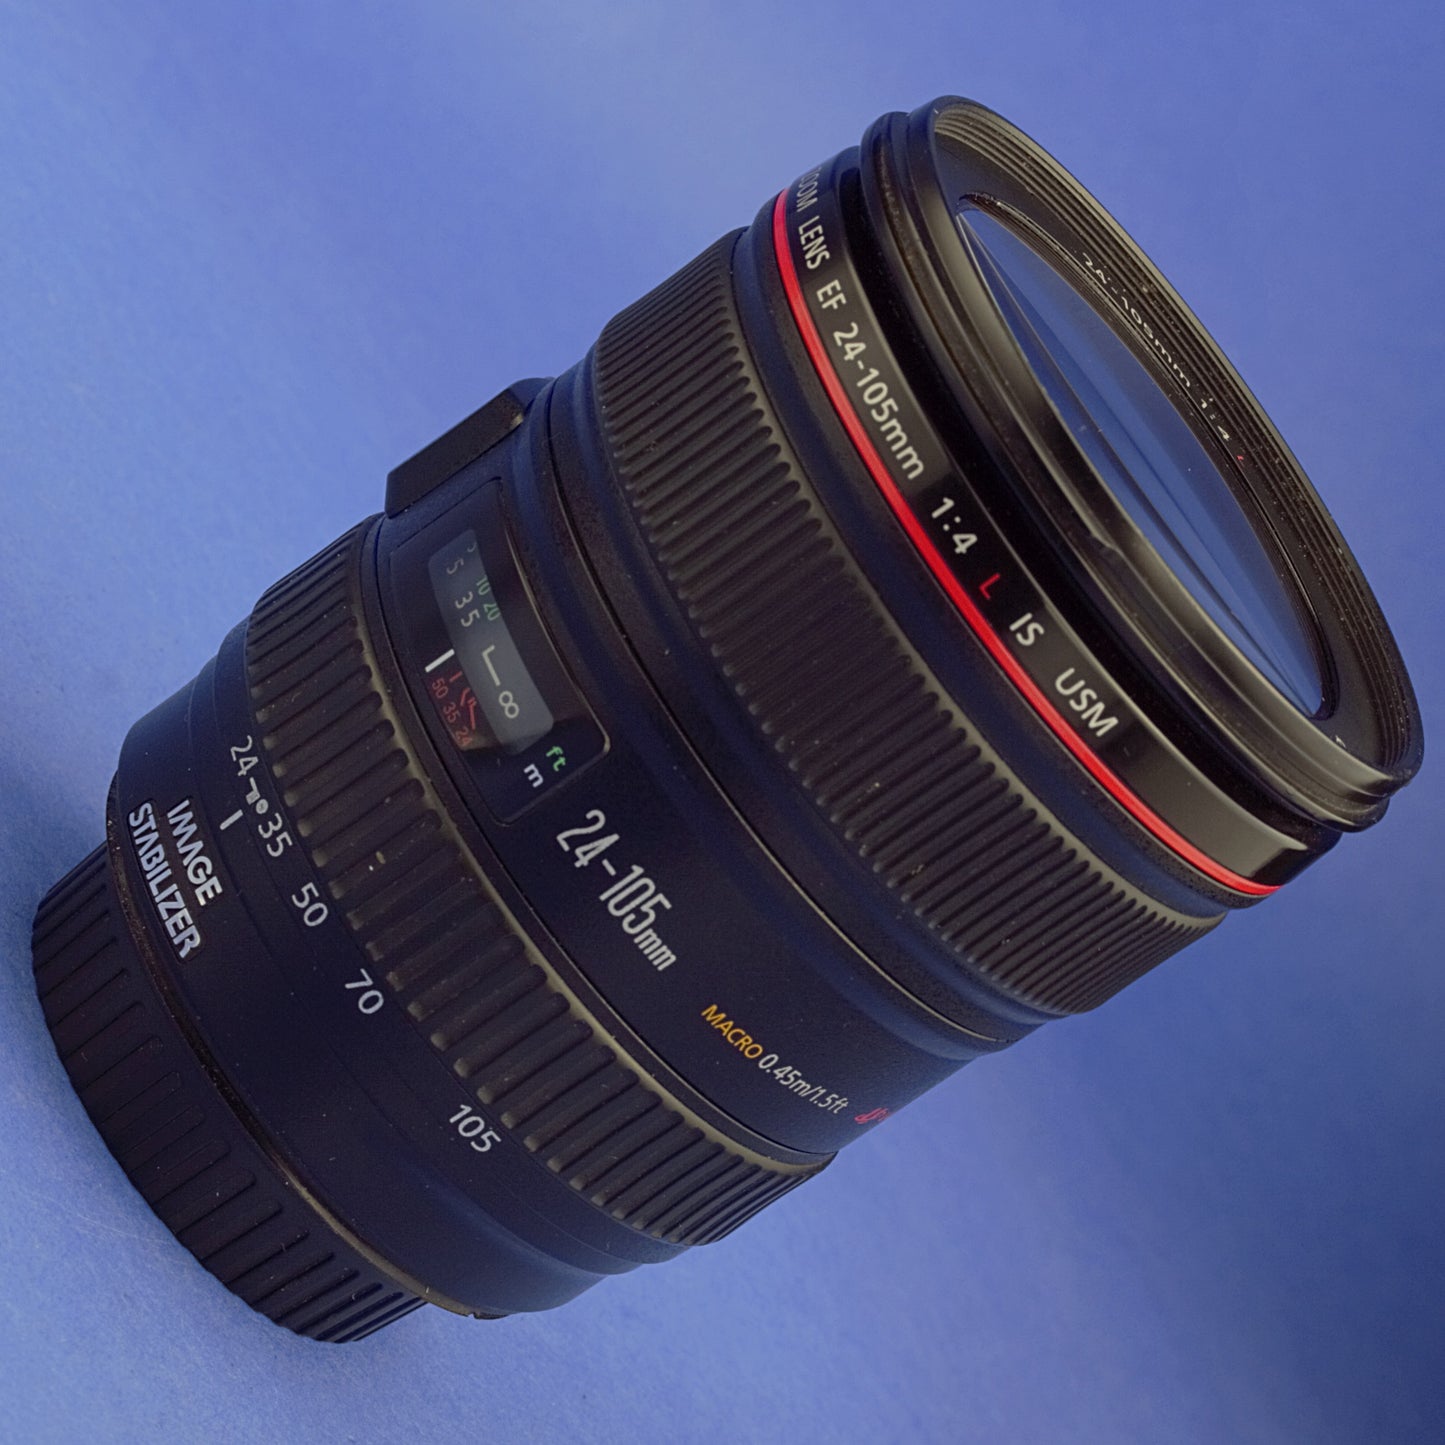 Canon EF 24-105mm F4 L Lens